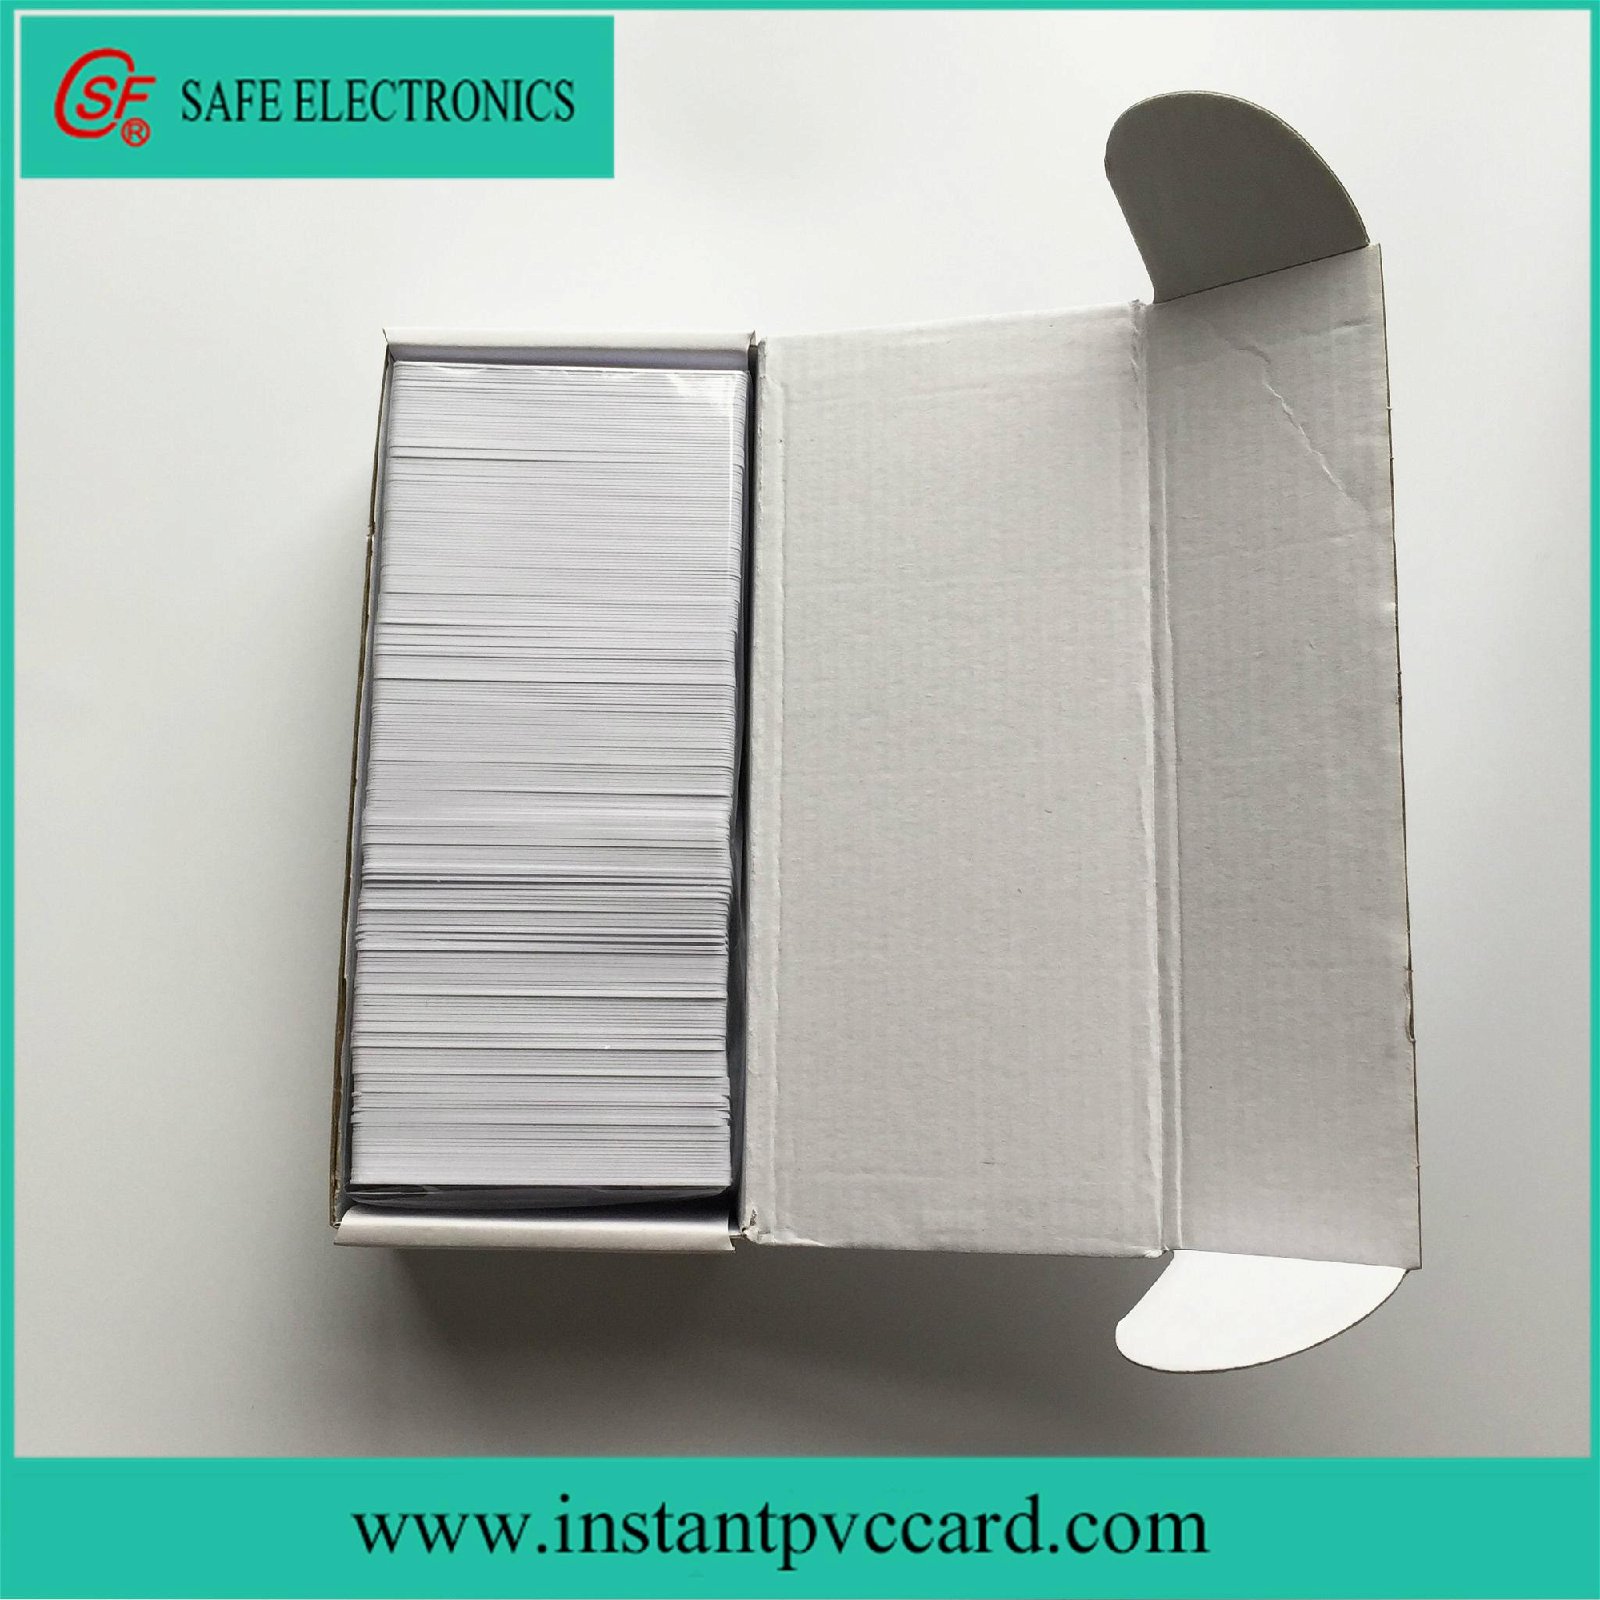 Dual sides printable 125KHz RFID instant PVC card 5